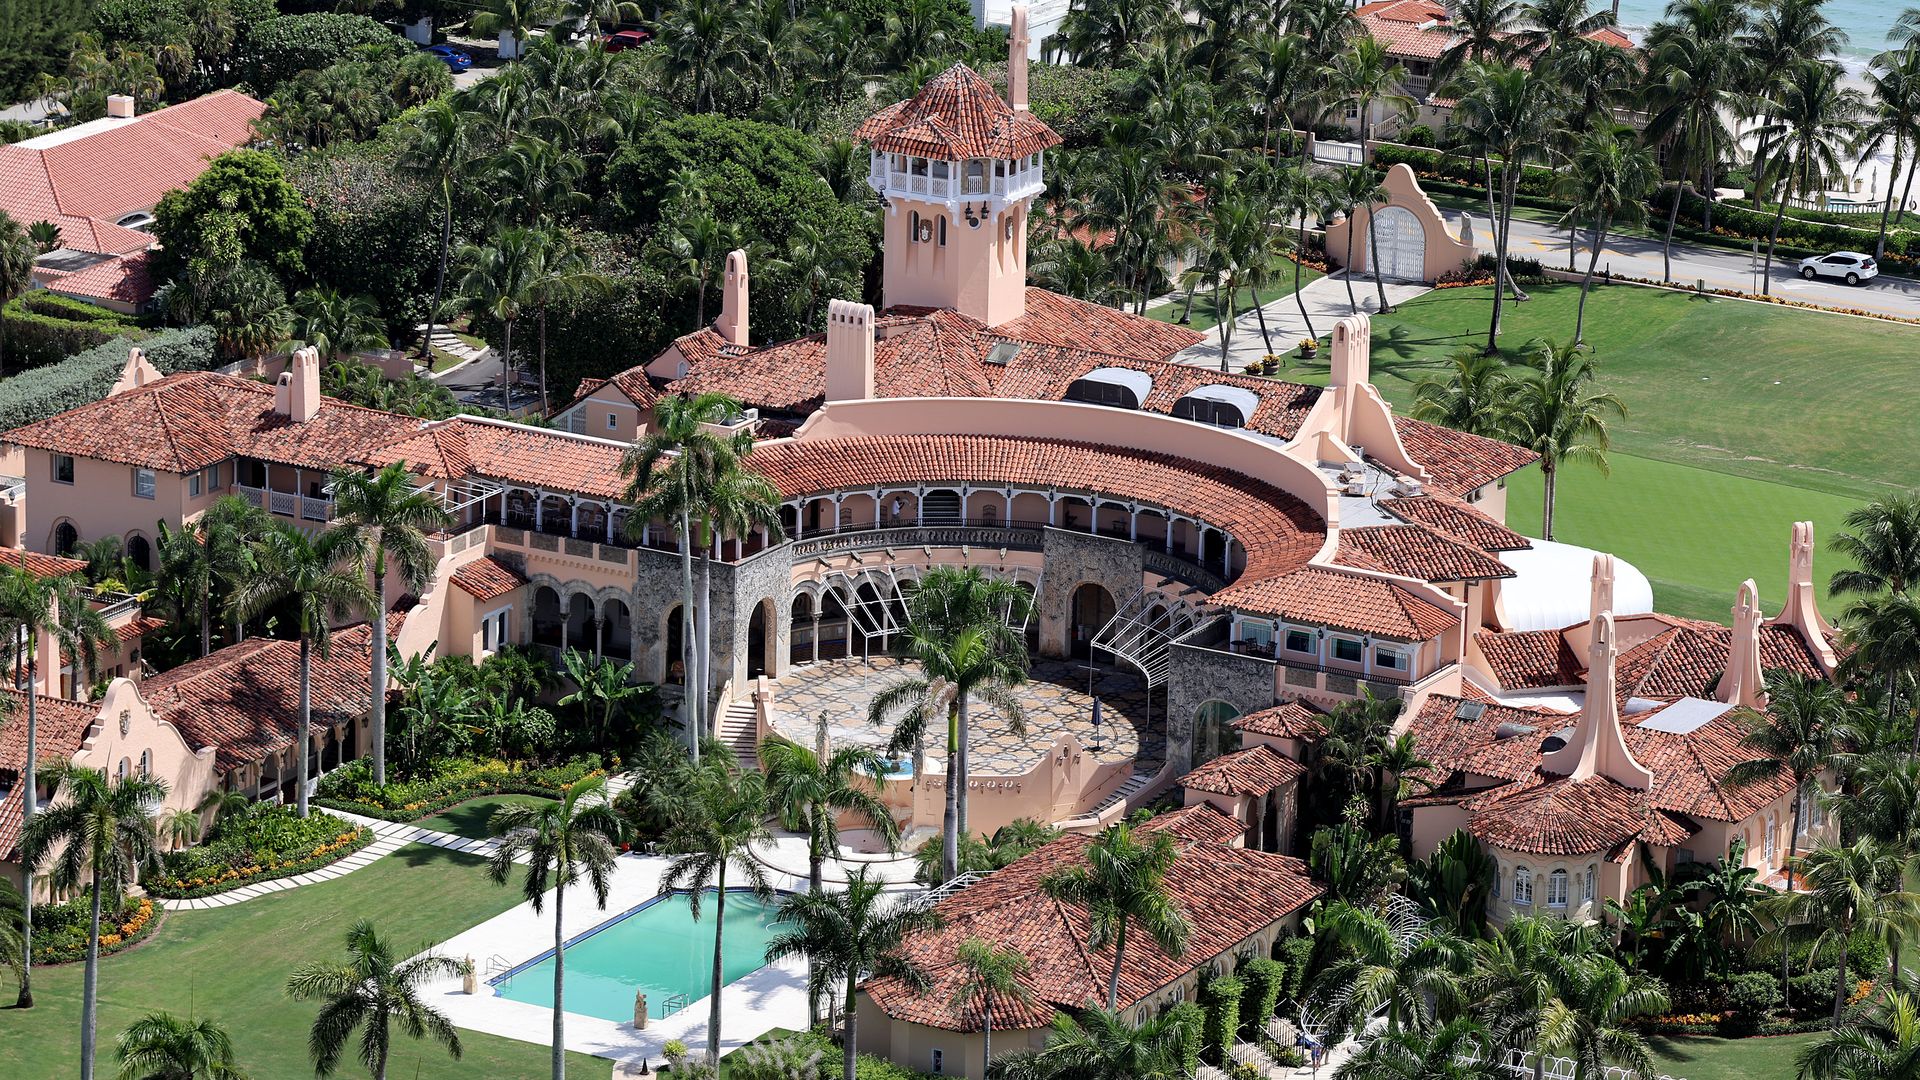  former U.S. President Donald Trump's Mar-a-Lago estate is seen on September 14, 2022